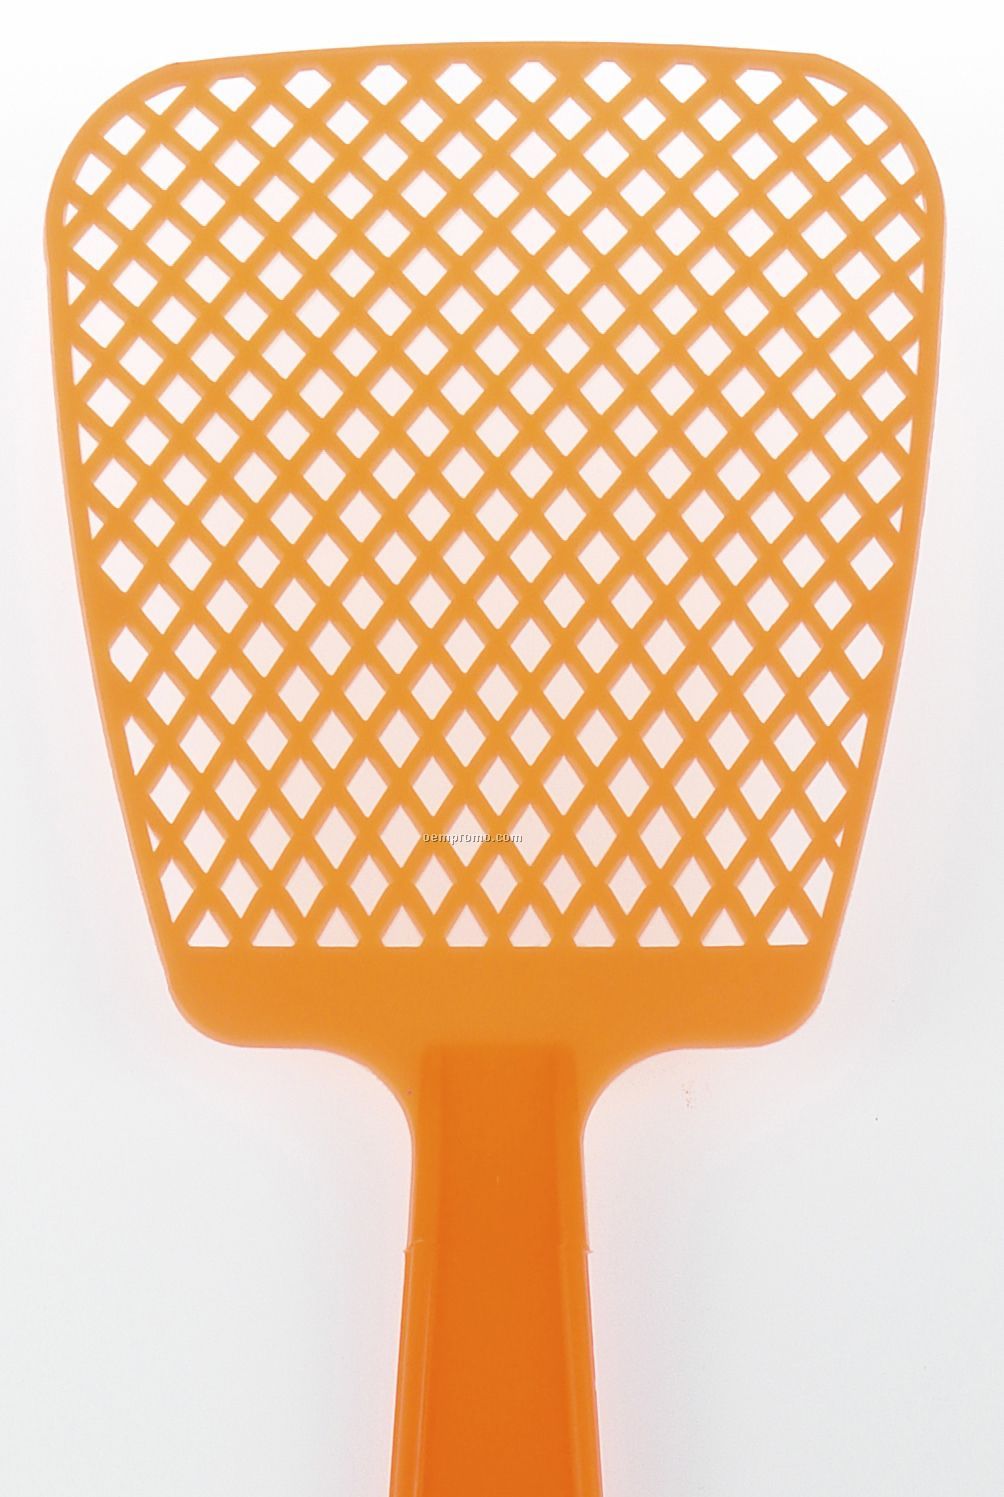 fly swatter clip art - photo #37